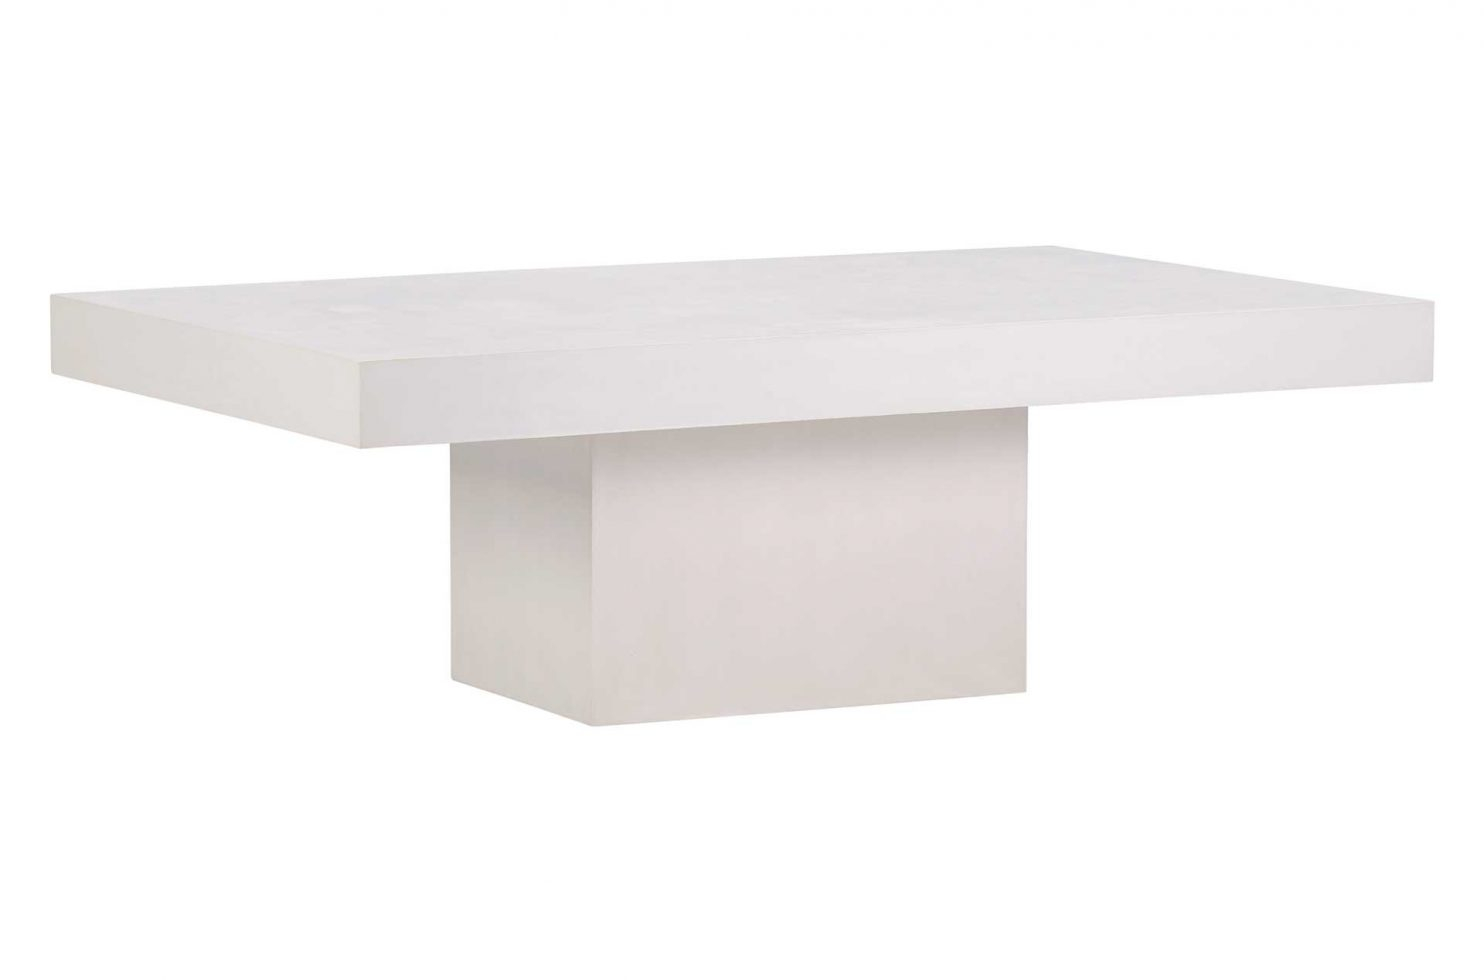 Seasonal Living Perpetual Concrete Terrace Coffee Table - Ivory White